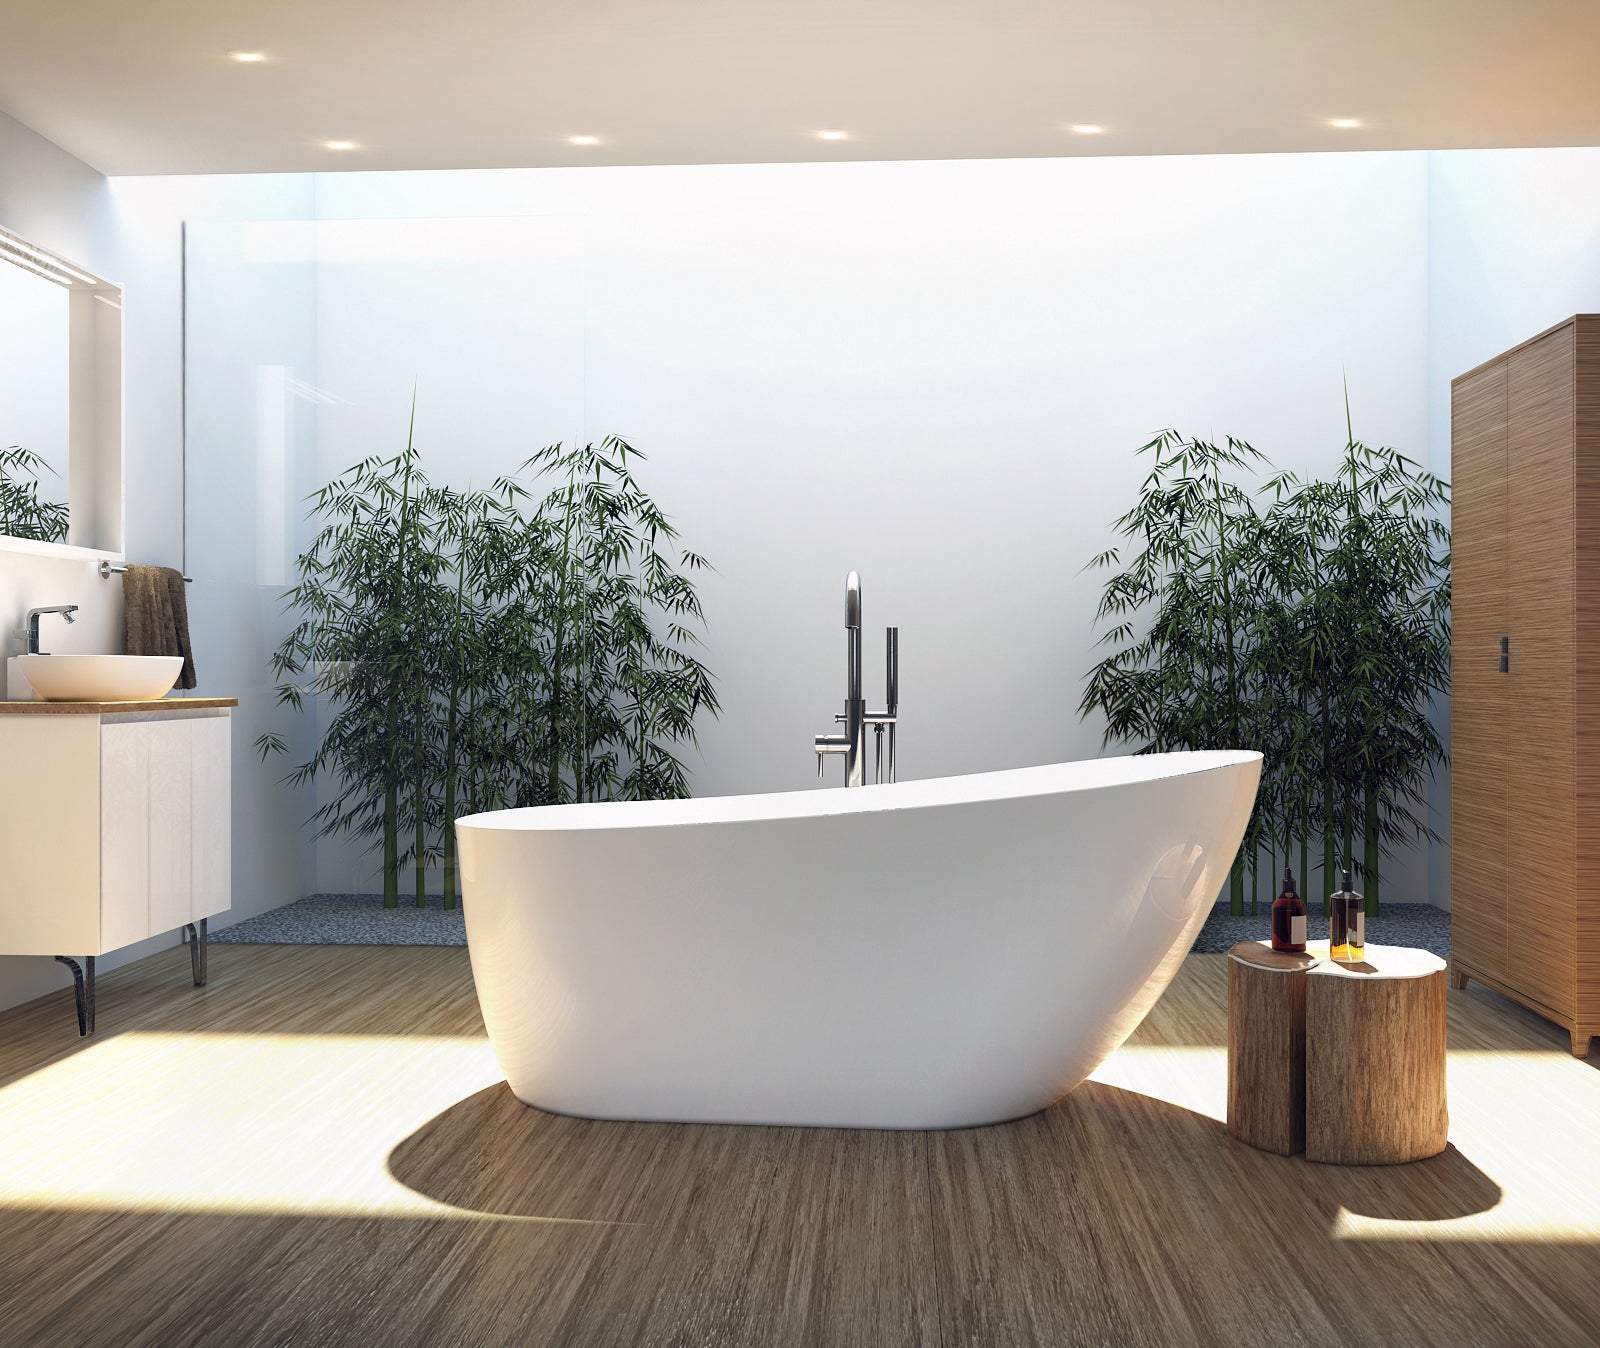 A & E Bath and Shower Riviera 59" Premium Oval Freestanding Bathtub - Luxury Freestanding Tubs